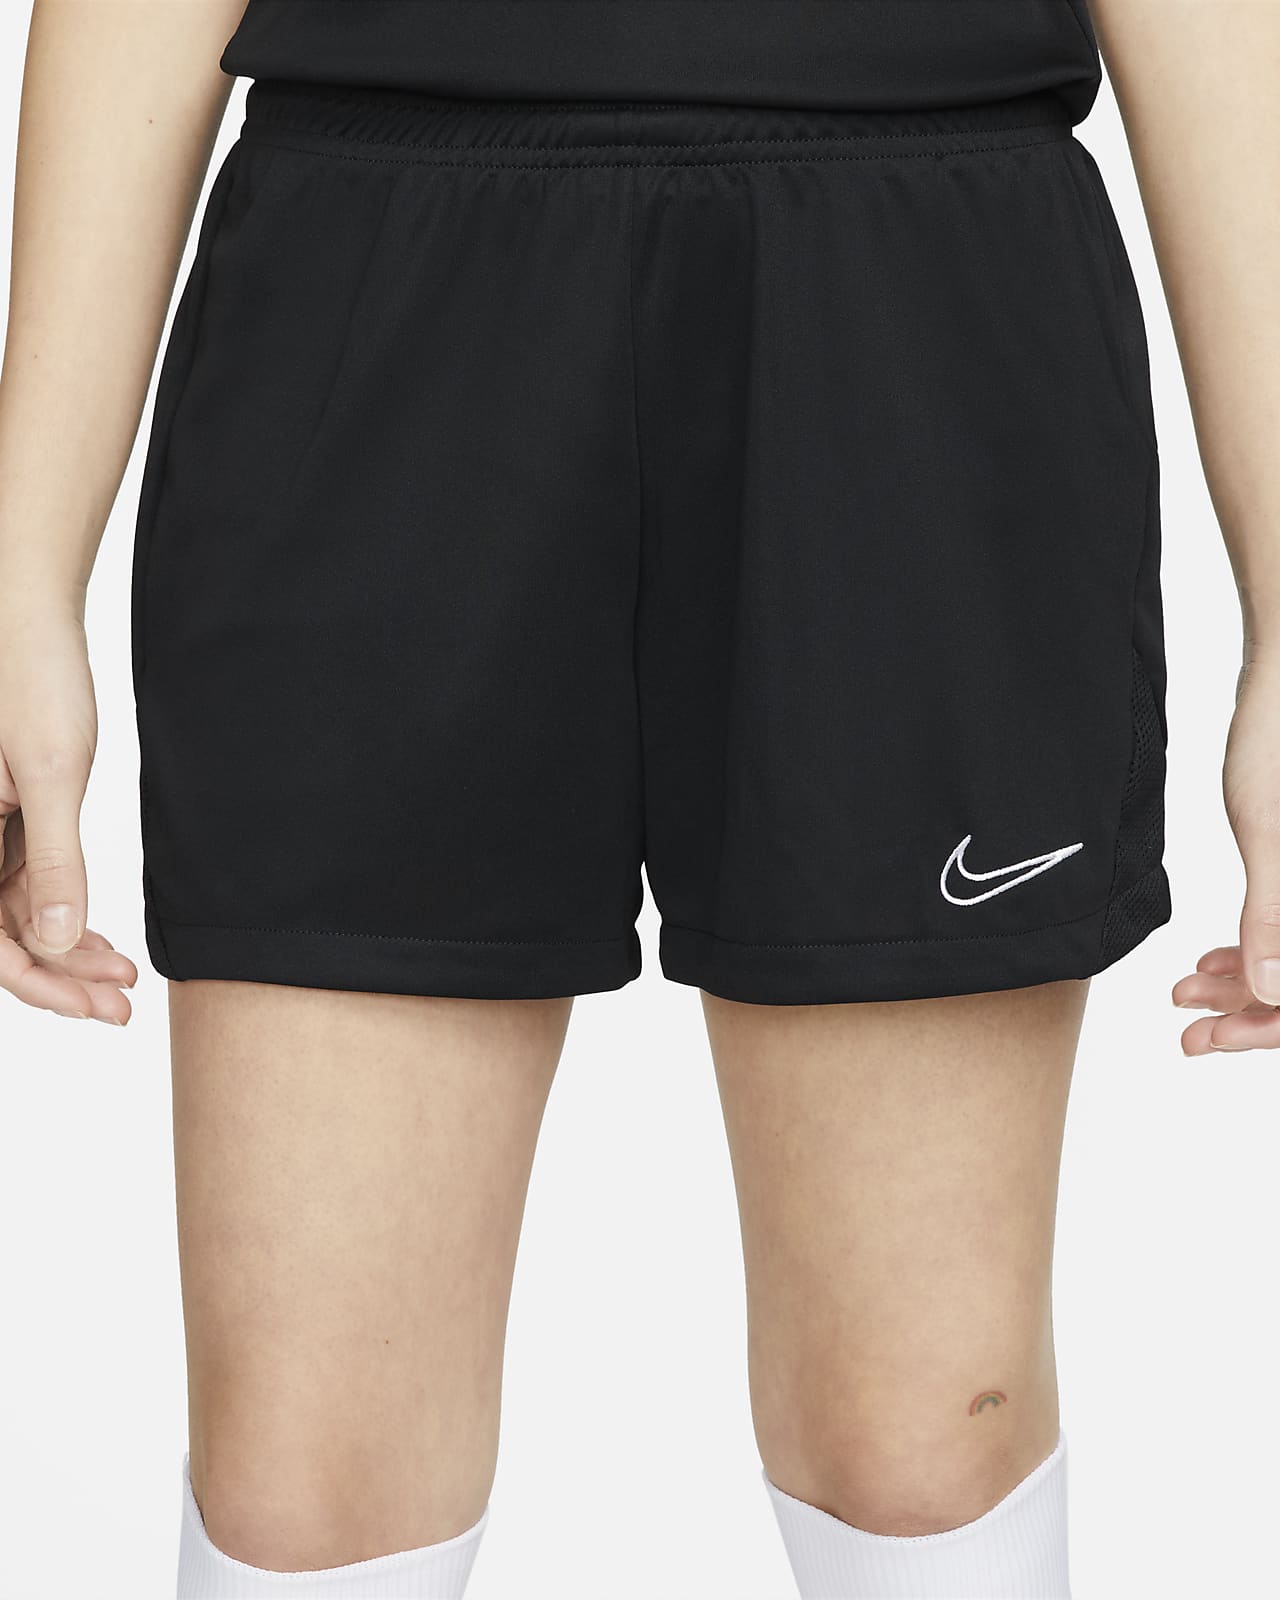 nike girls soccer shorts